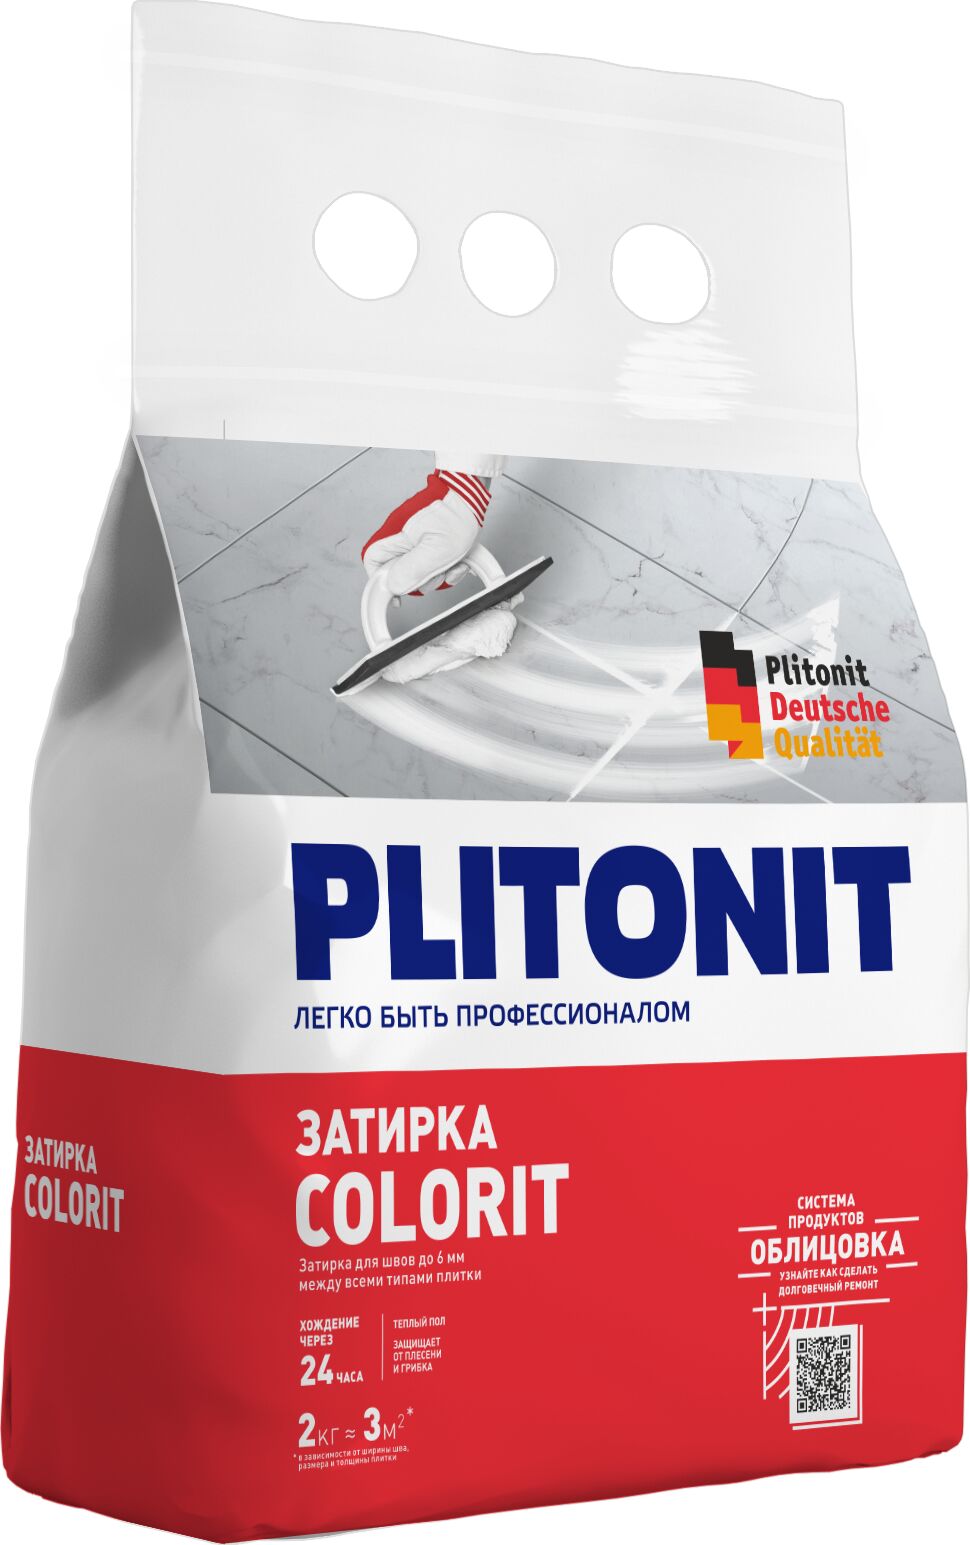 PLITONIT Colorit затирка между всеми типами плитки (1,5-6 мм) ЧЕРНАЯ-2 , PLITONIT Colorit затирка между всеми типами плитки (1,5-6 мм) ЧЕРНАЯ-2 